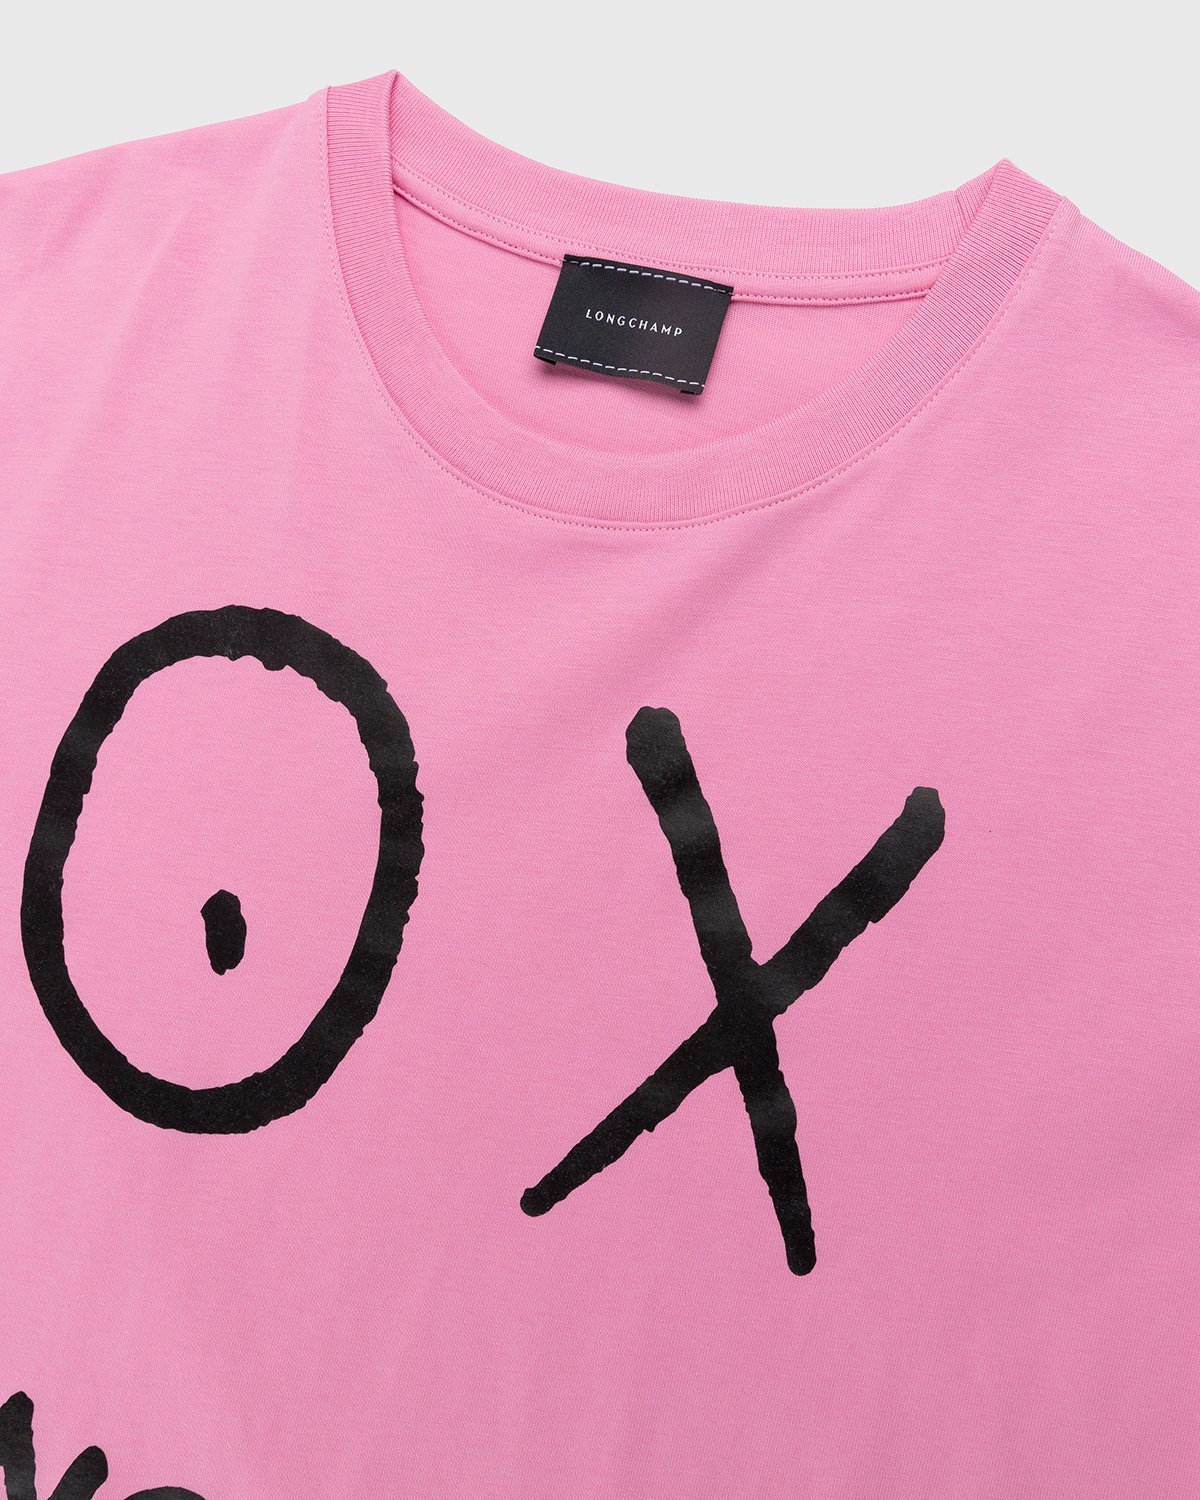 Longchamp x André Saraiva - T-Shirt Pink - Clothing - Pink - Image 2